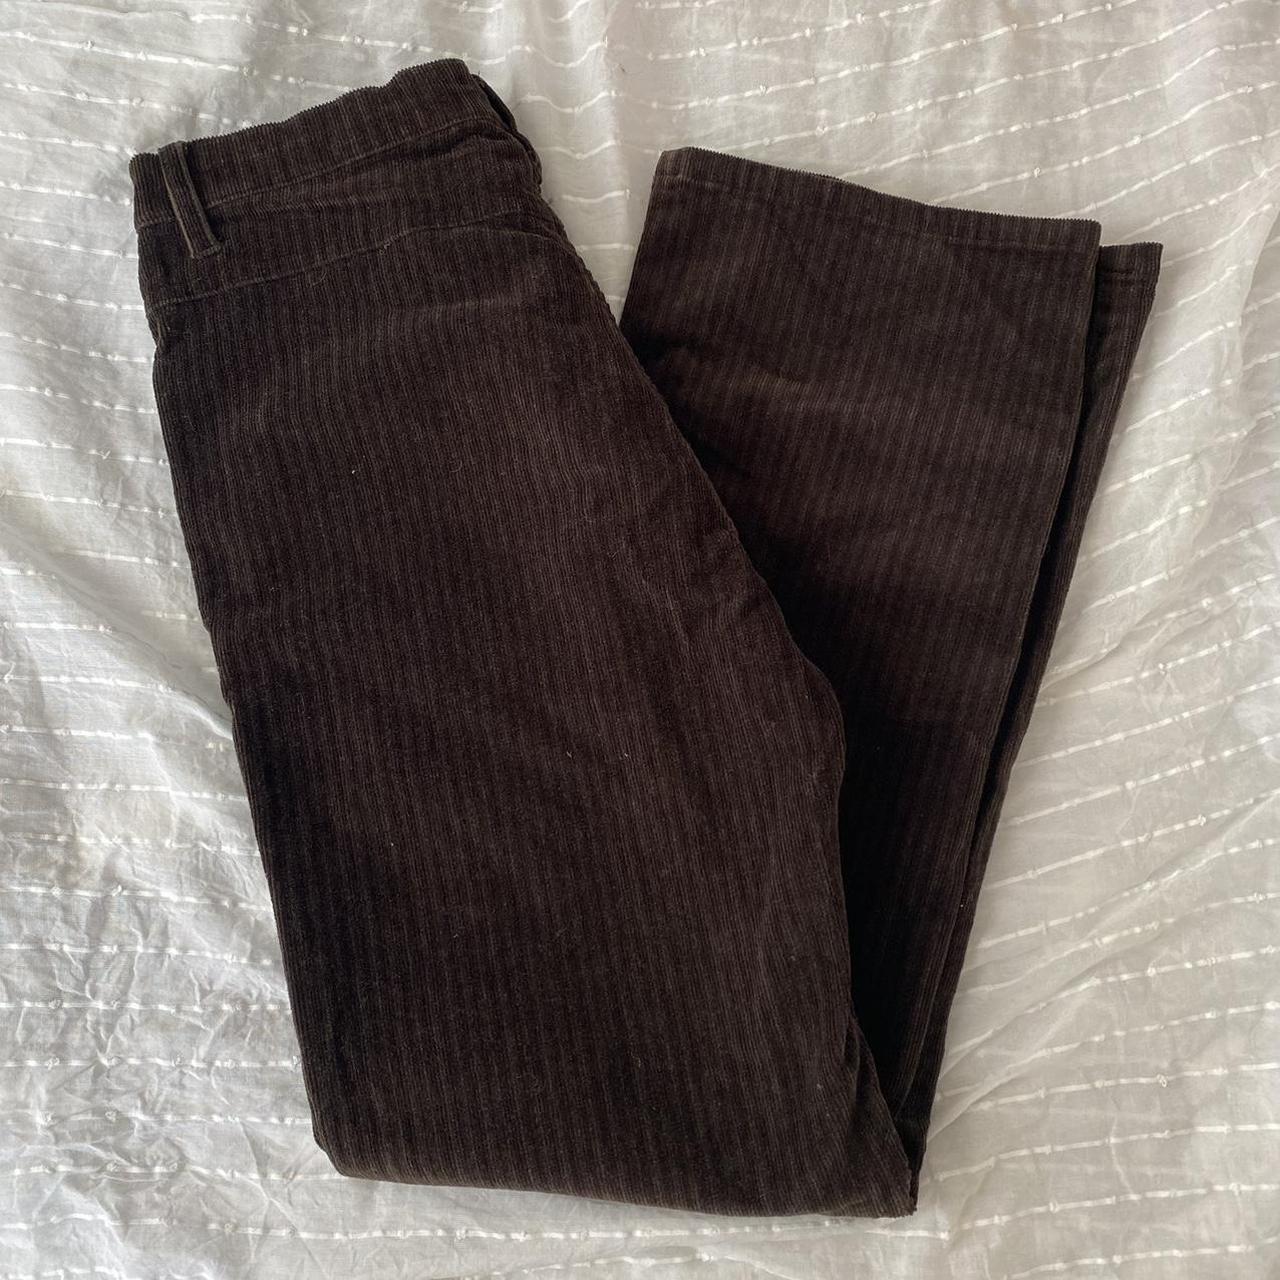 Vintage Simon Chang brown corduroy pants Love these... - Depop